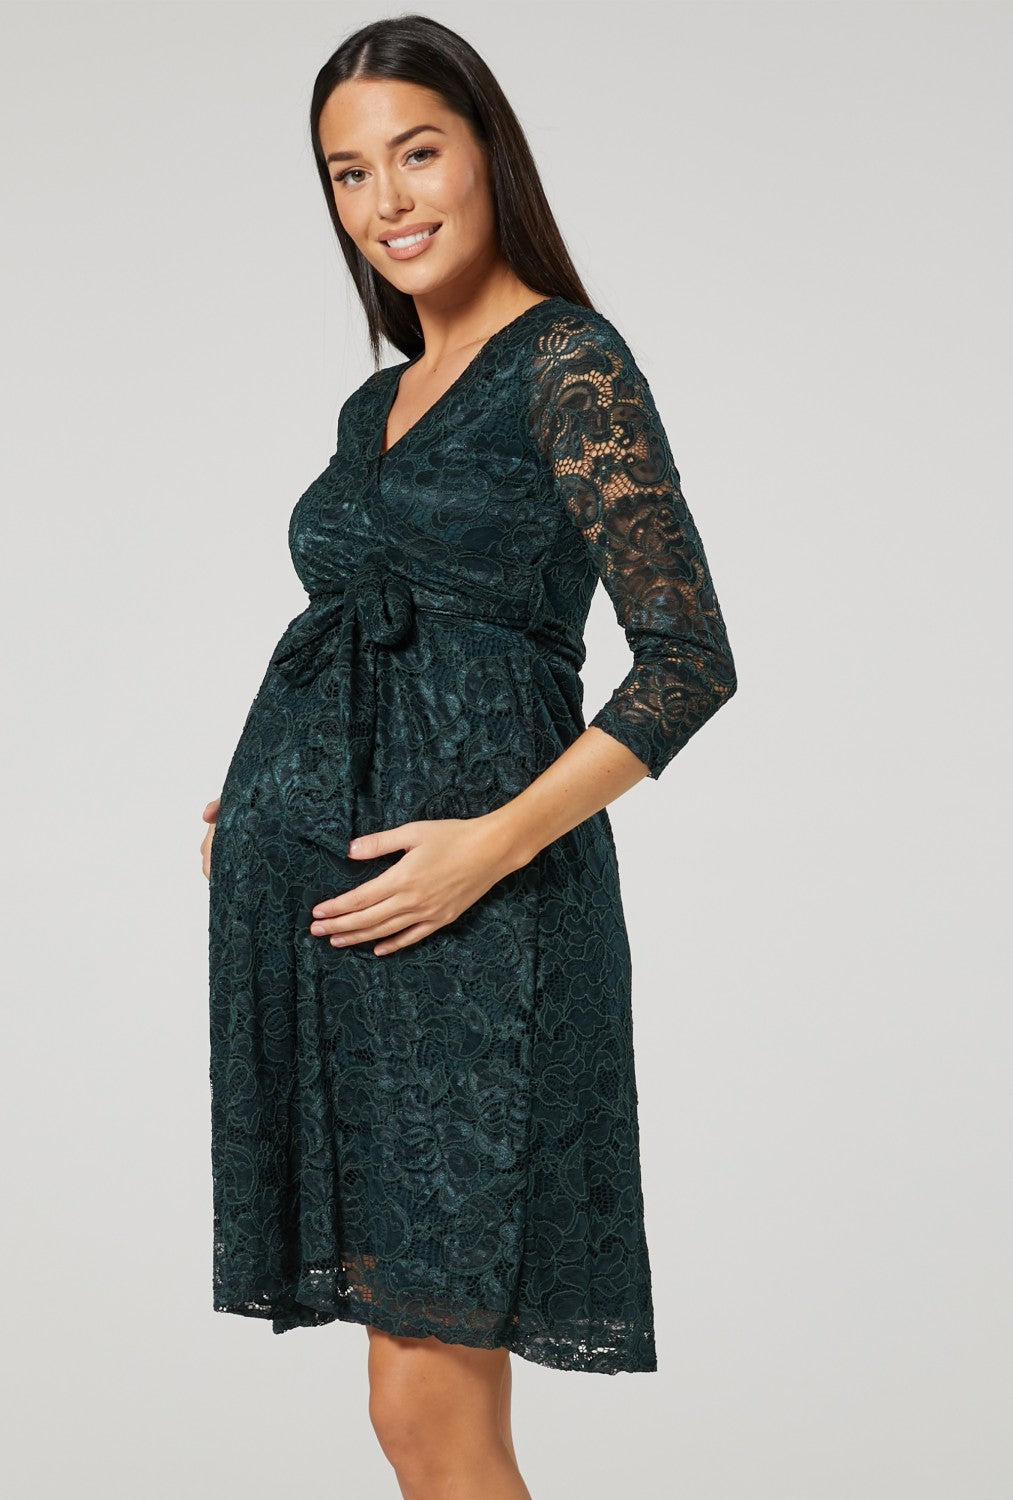 Maternity Nursing Lace Dress